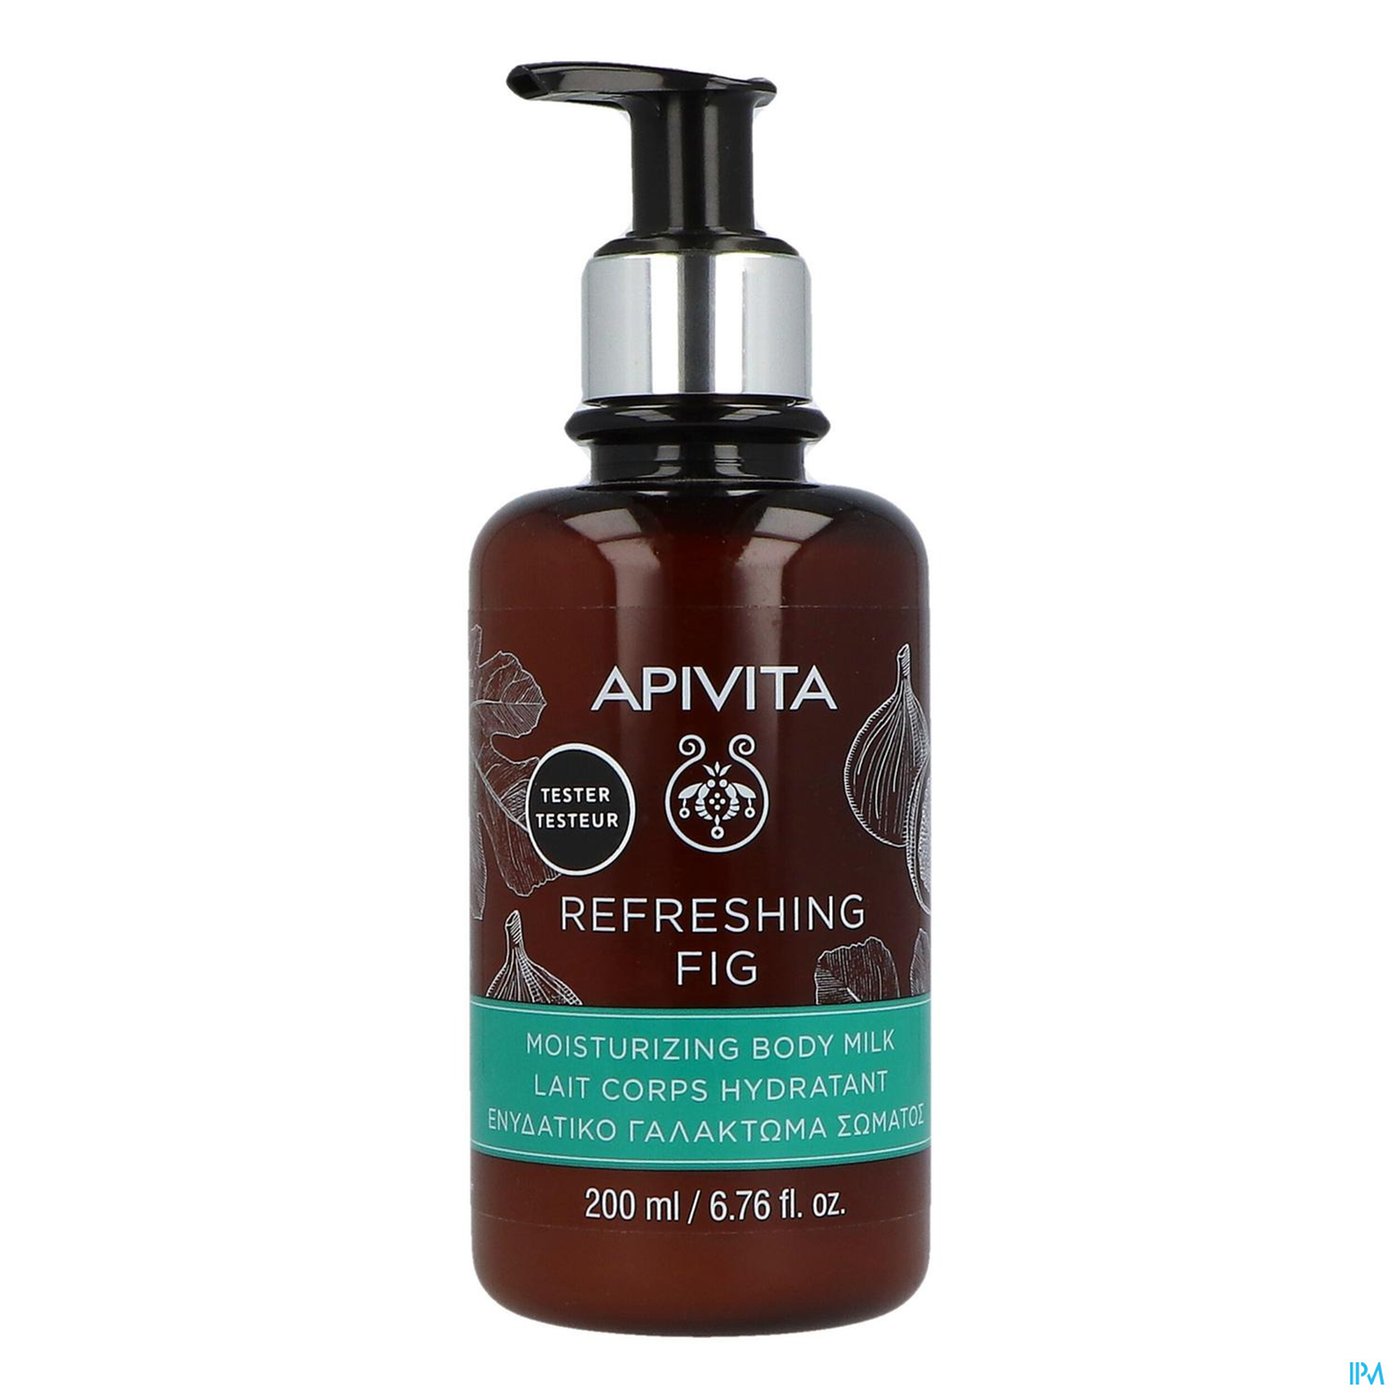 Apivita Refreshing Fig Bodymelk 200ml packshot